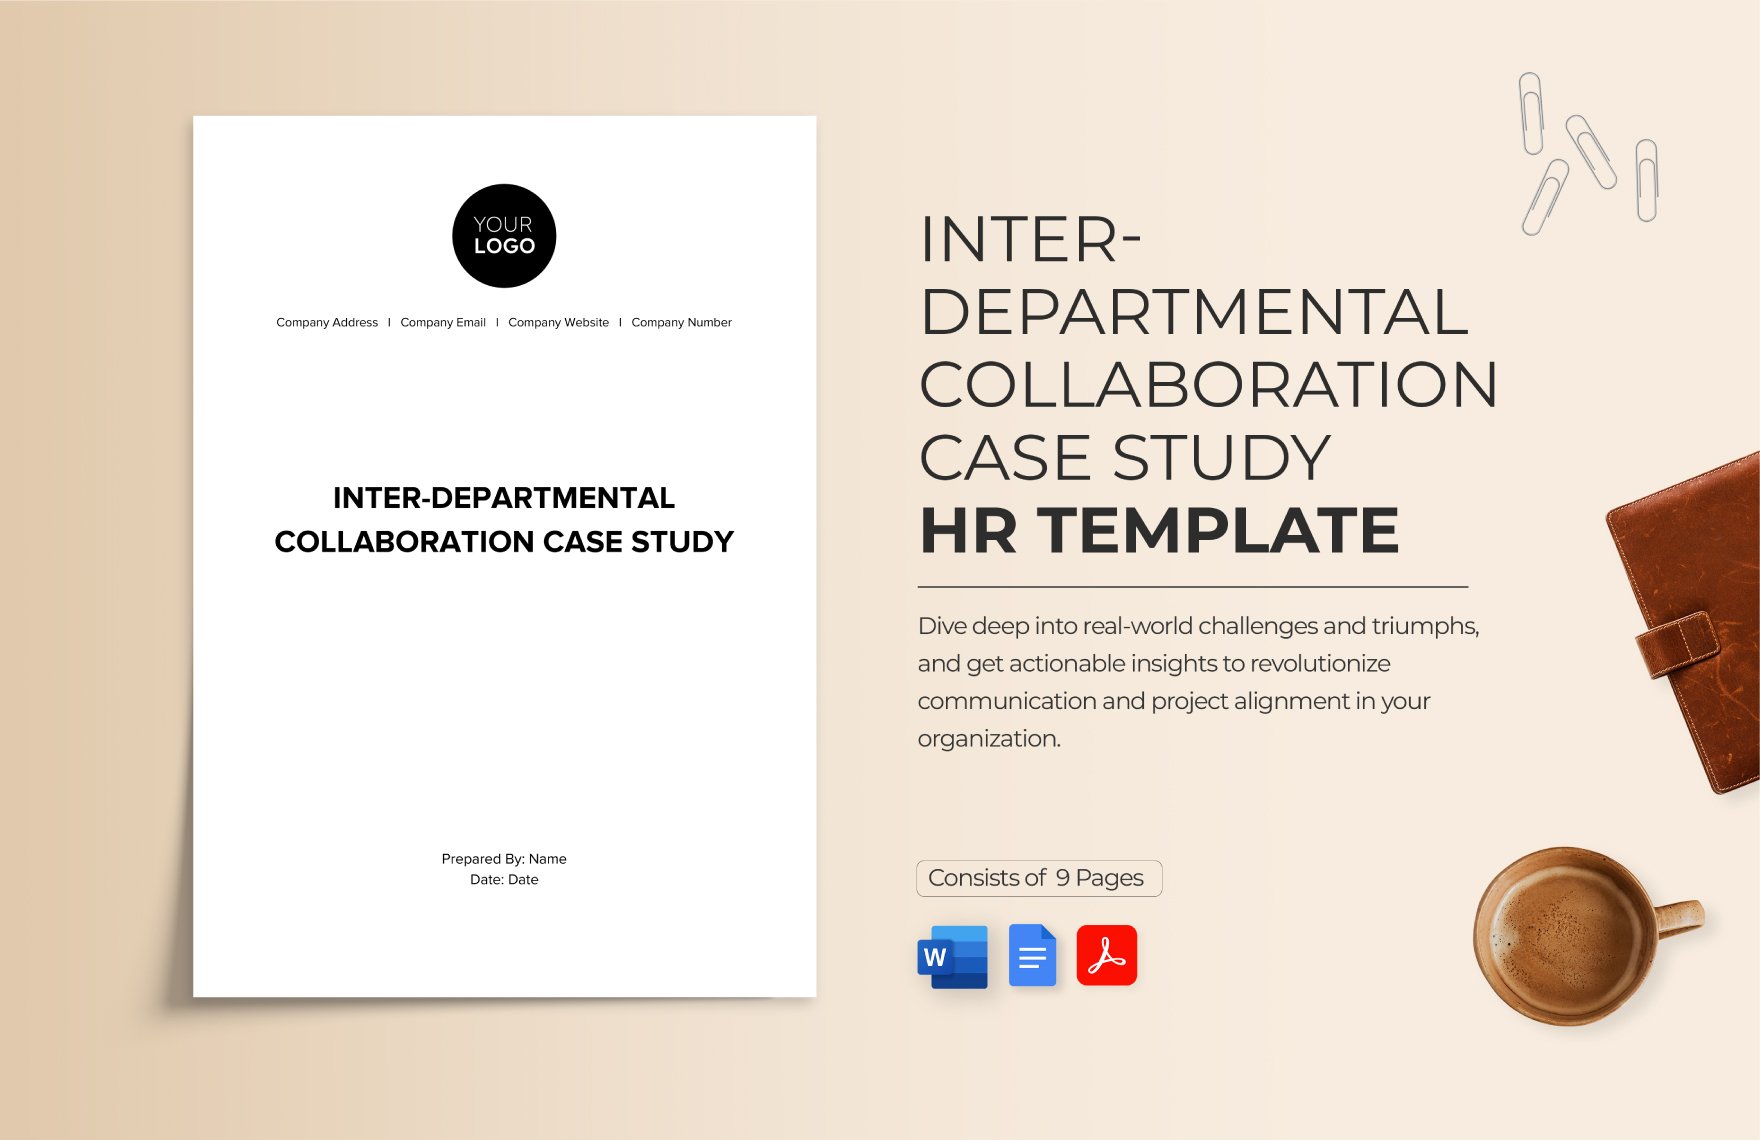 Inter-departmental Collaboration Case Study HR Template